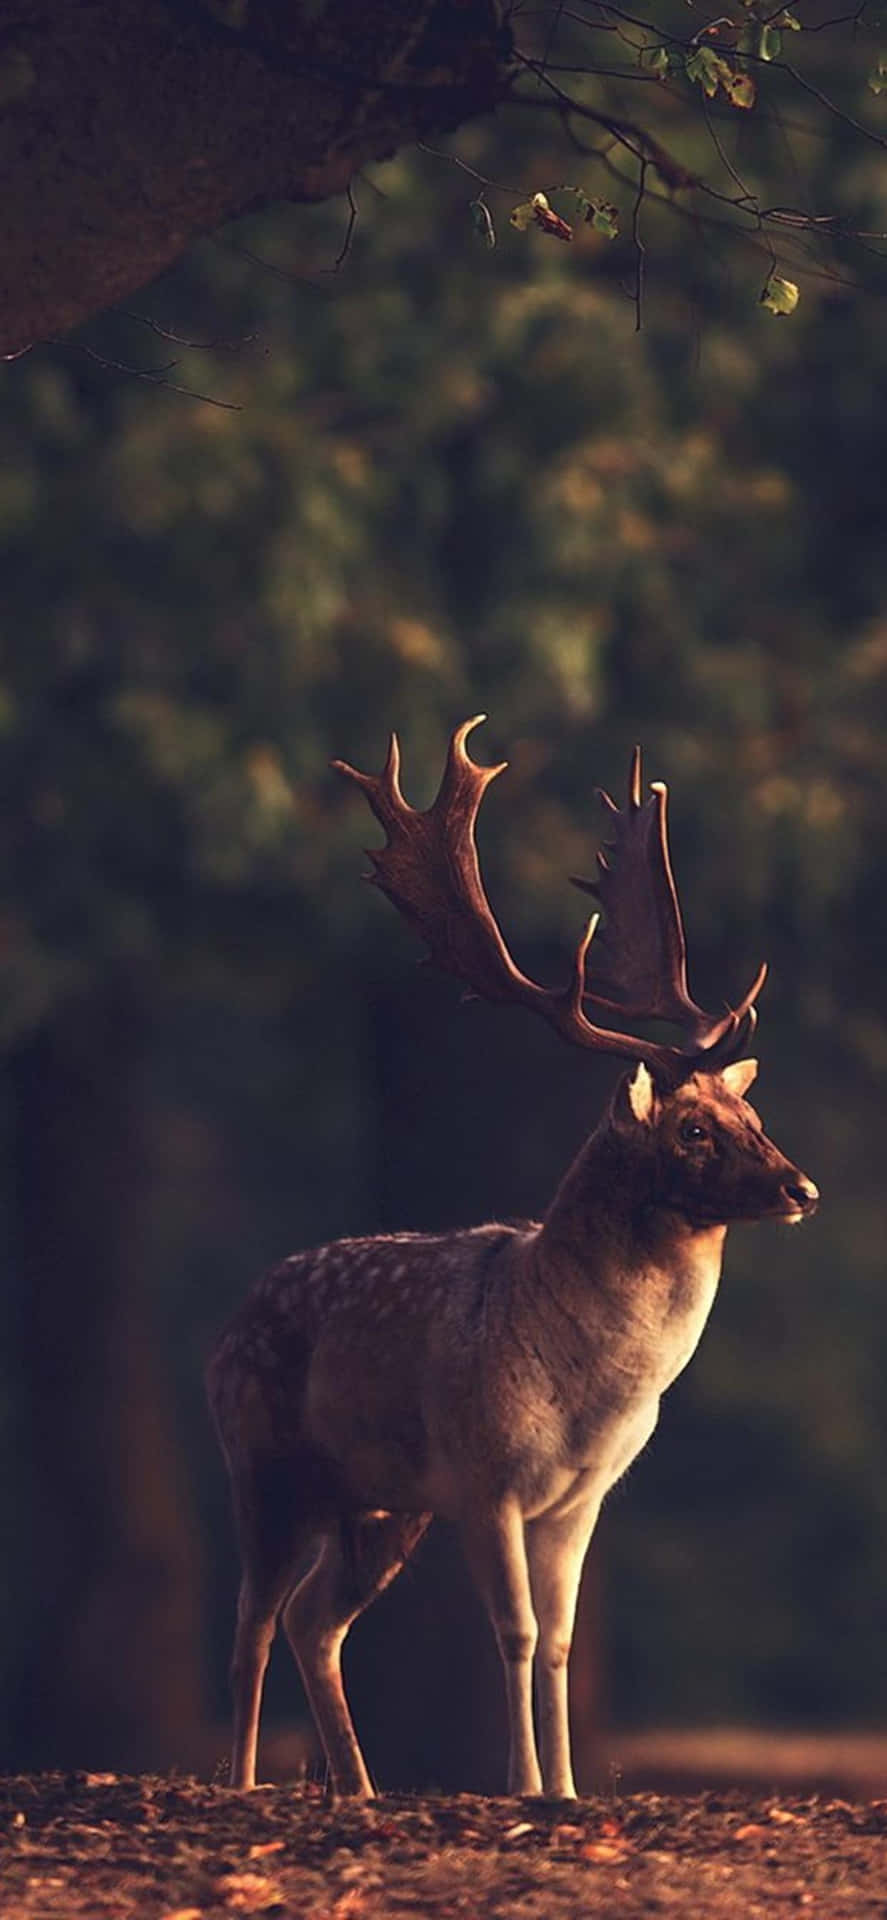 Majestic Deer Enjoying Morning in the Forest Wallpaper